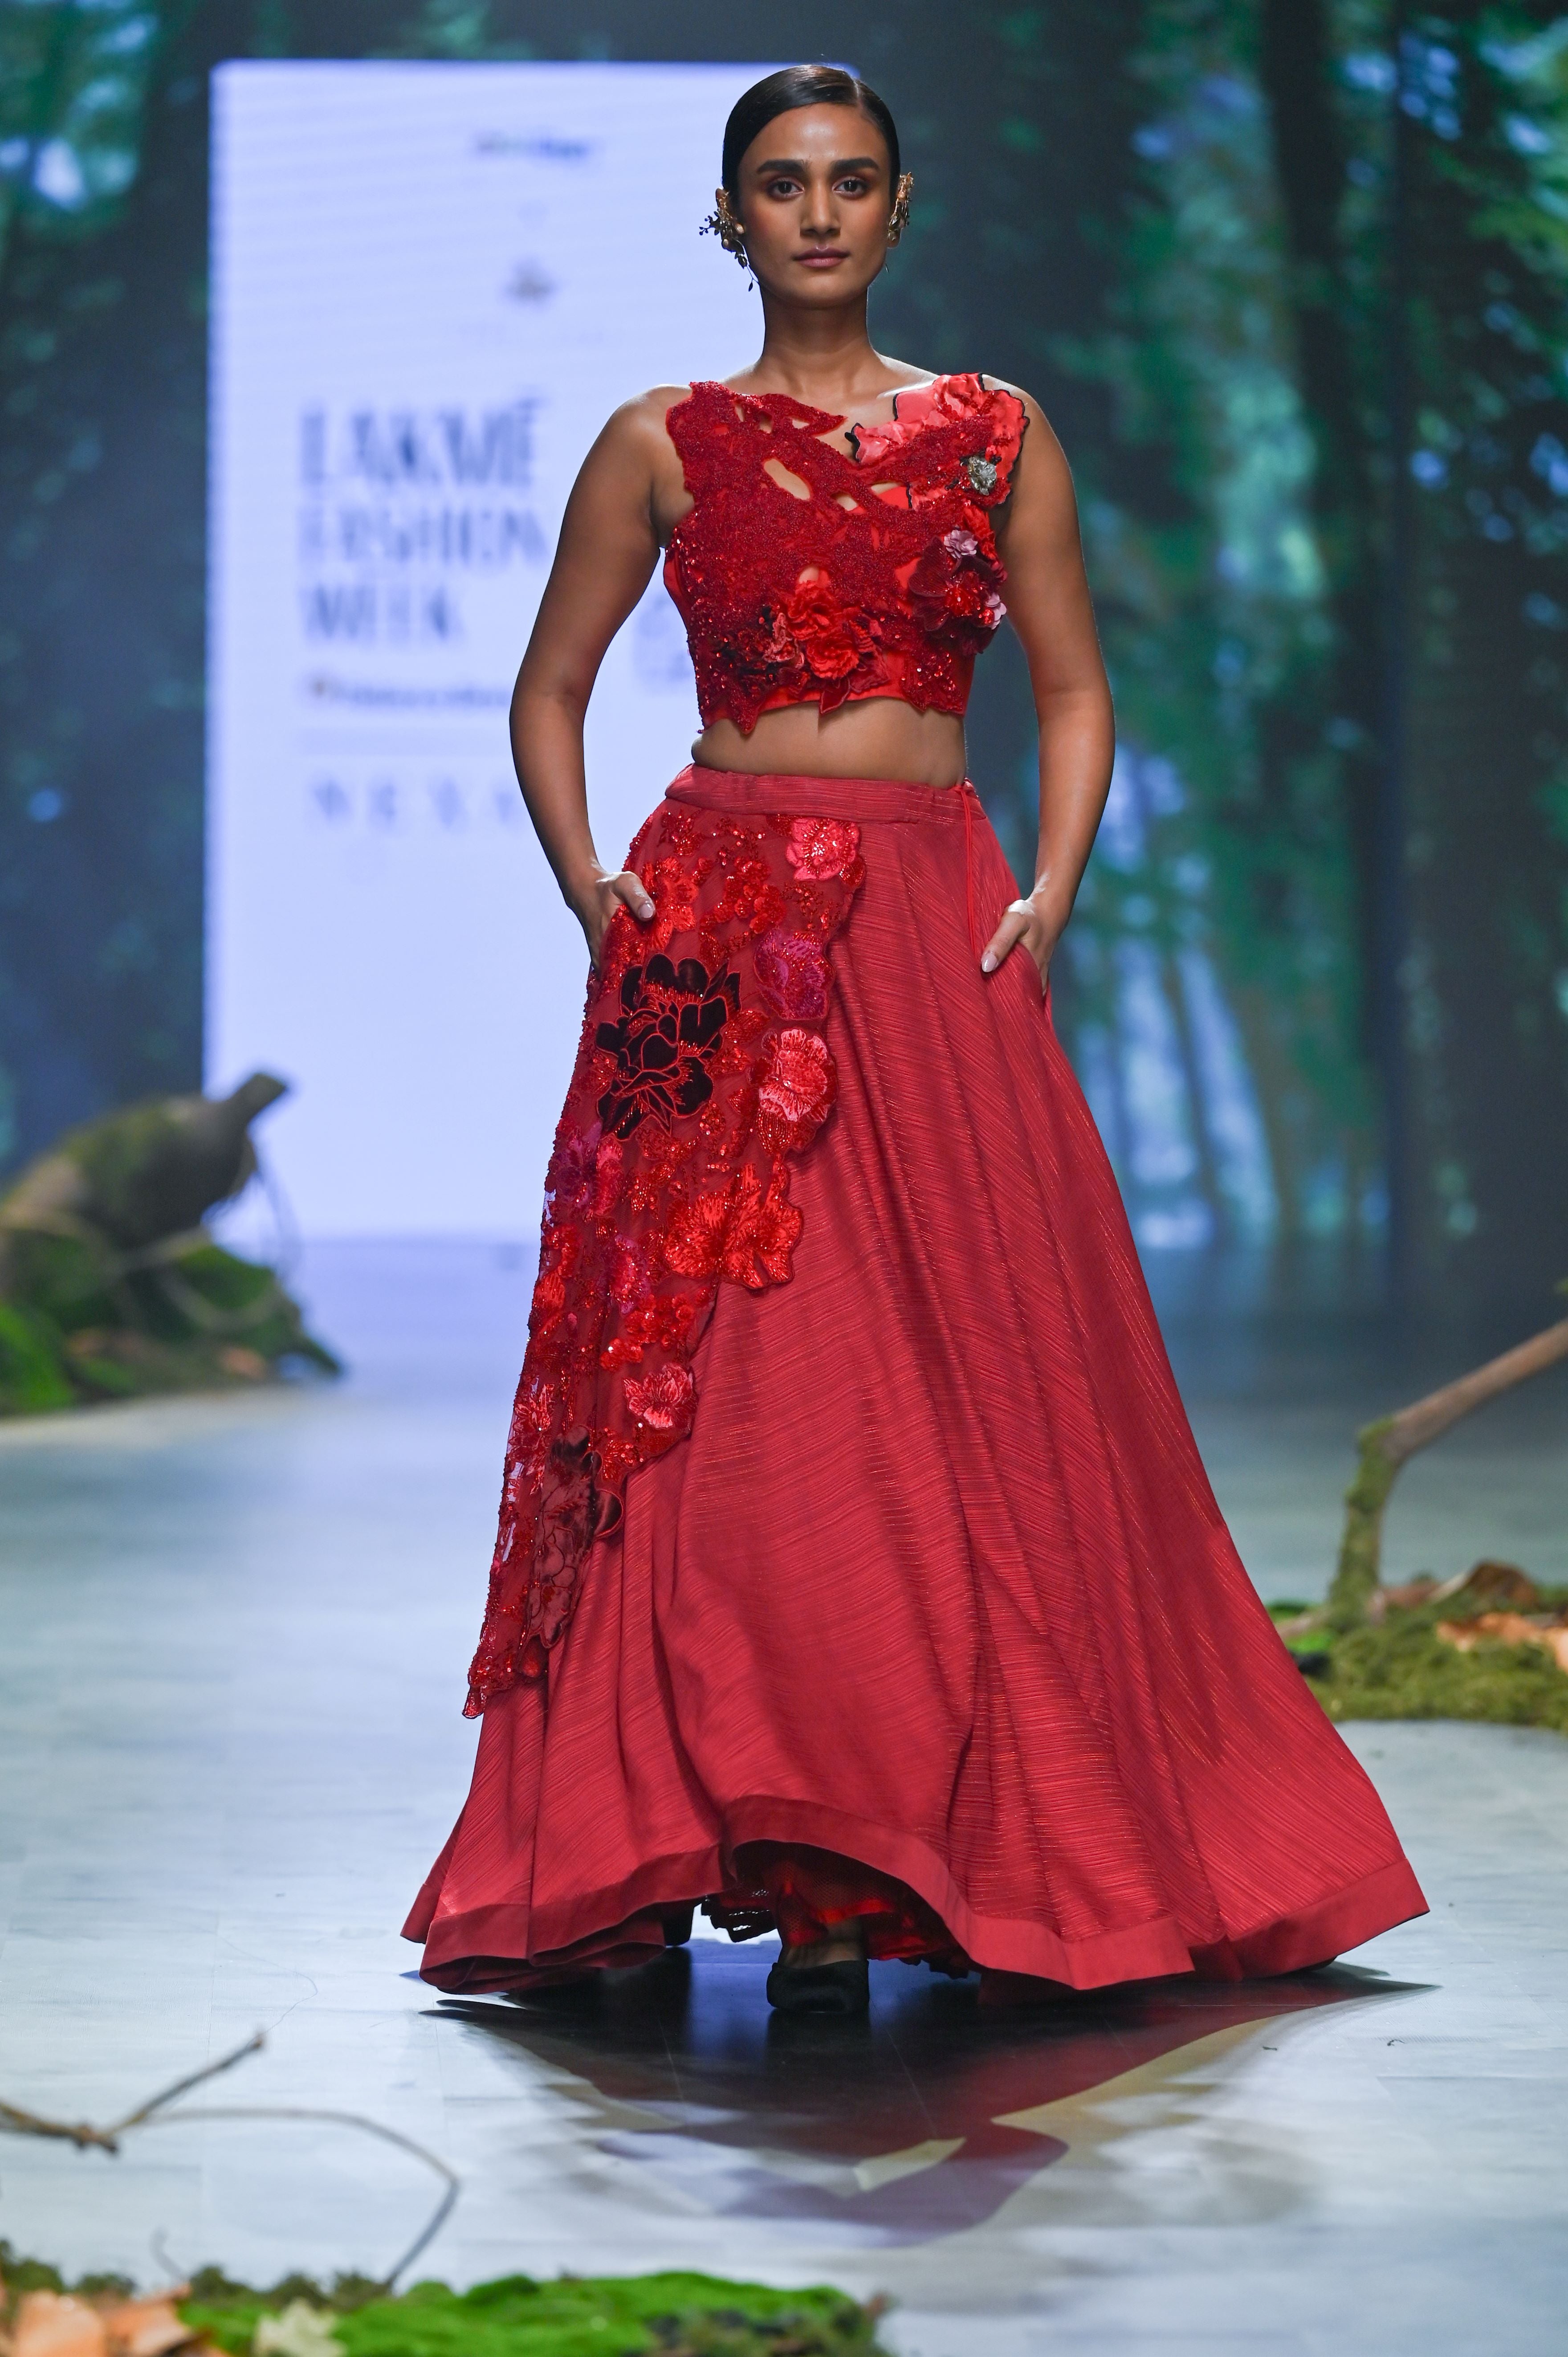 Katrina Kaif At Lakme Fashion Week 2019: Manish Malhotra's Showstopper  Looks Ravishing In A Black-And-Gold Lehenga